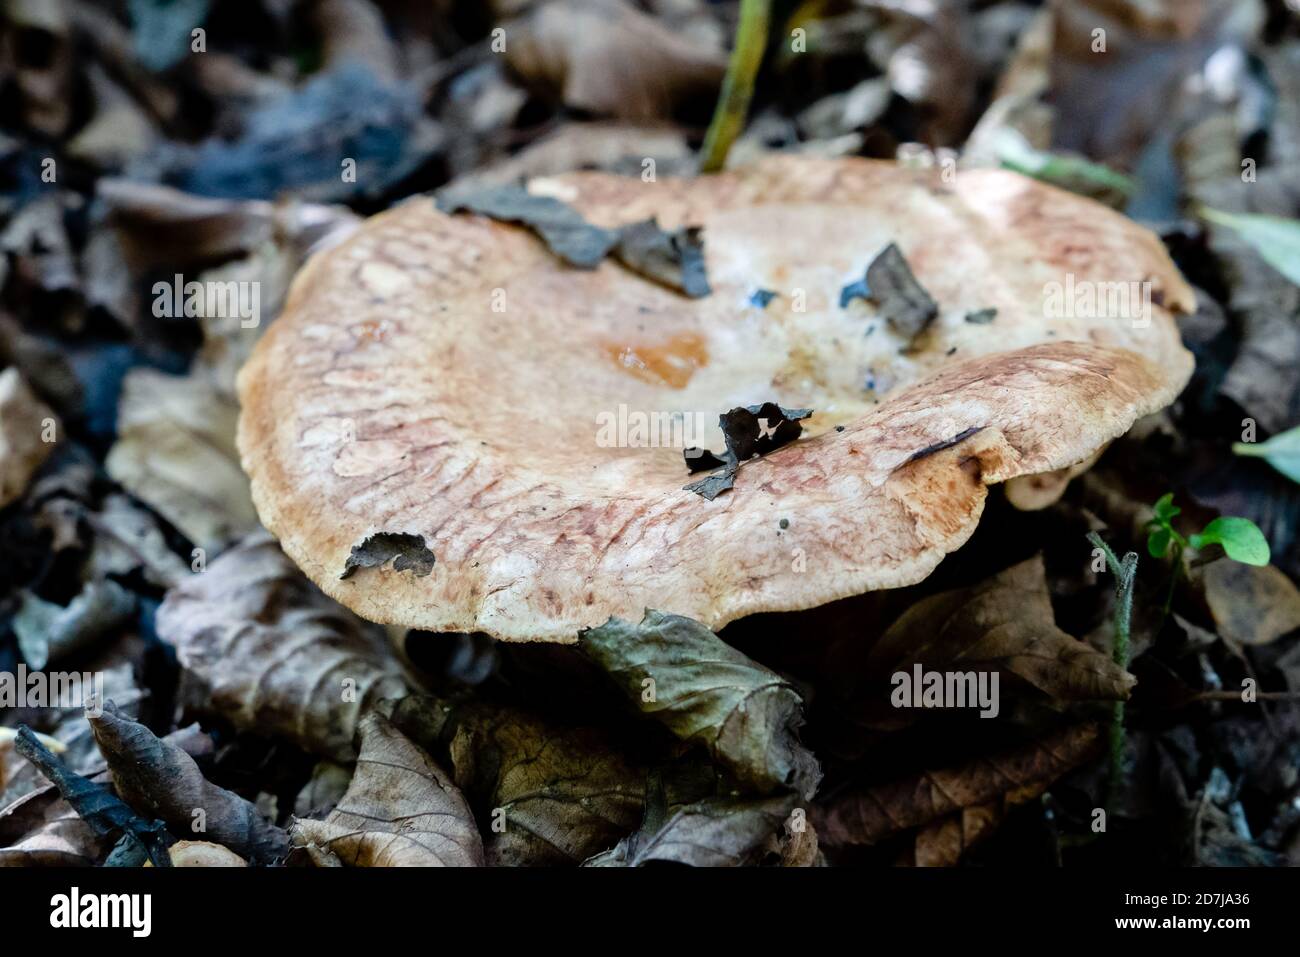 Shelf fungus, also called bracket fungus (basidiomycete) growing on a fallen tree Stock Photo